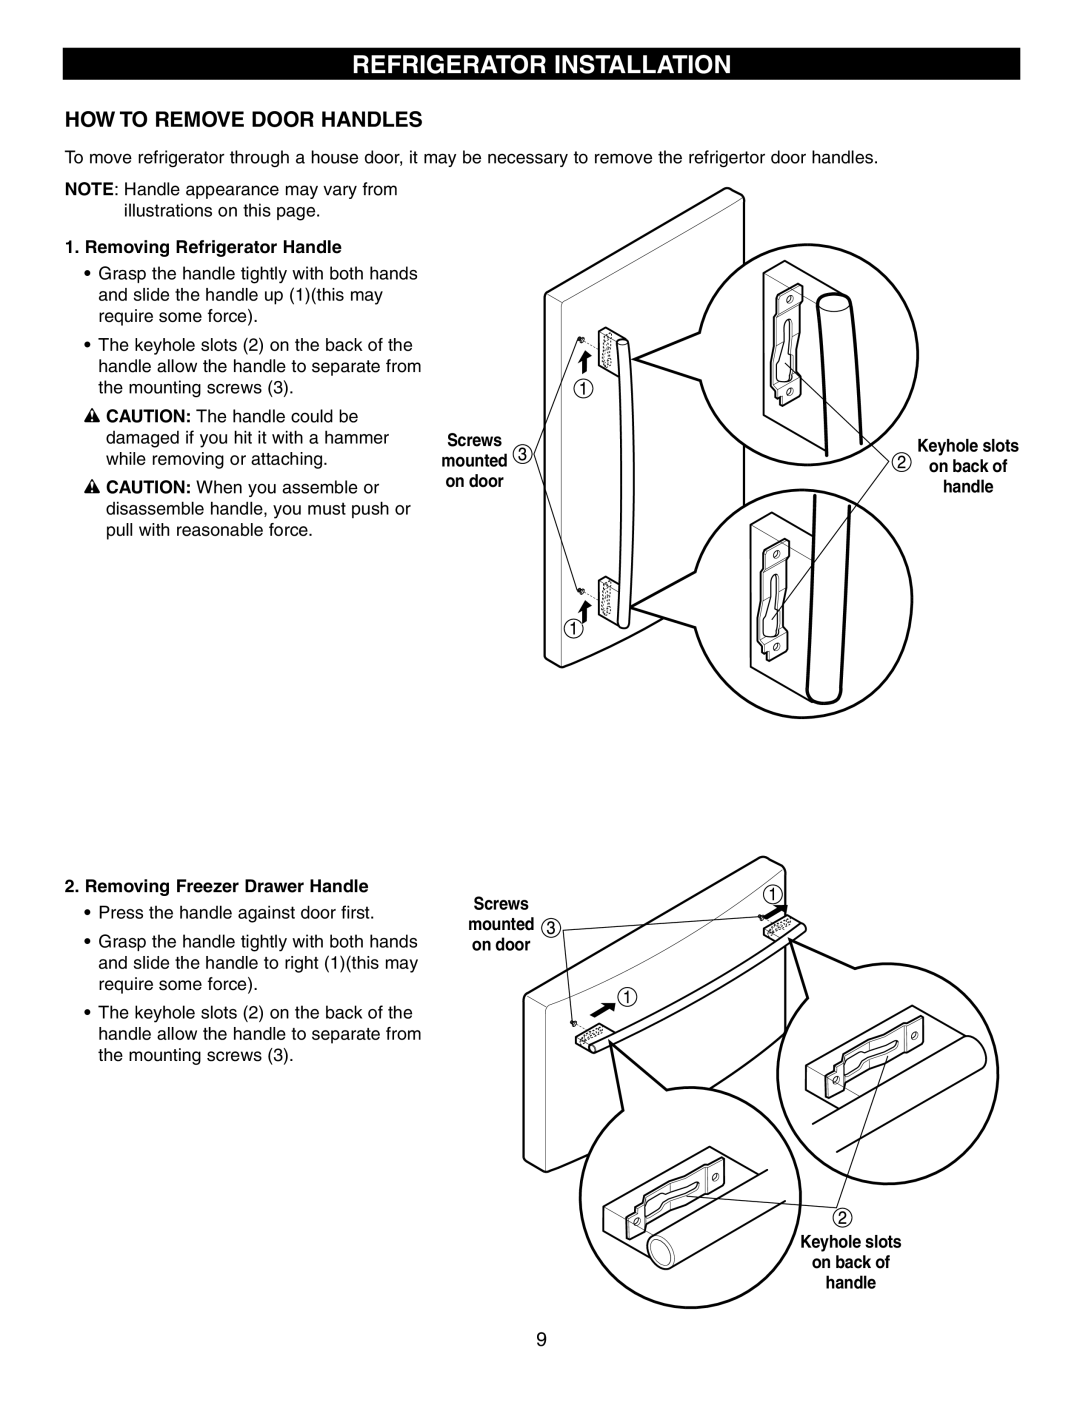 LG Electronics LFX25960 manual Refrigerator Installation, How To Remove Door Handles, Removing Refrigerator Handle, mounted 